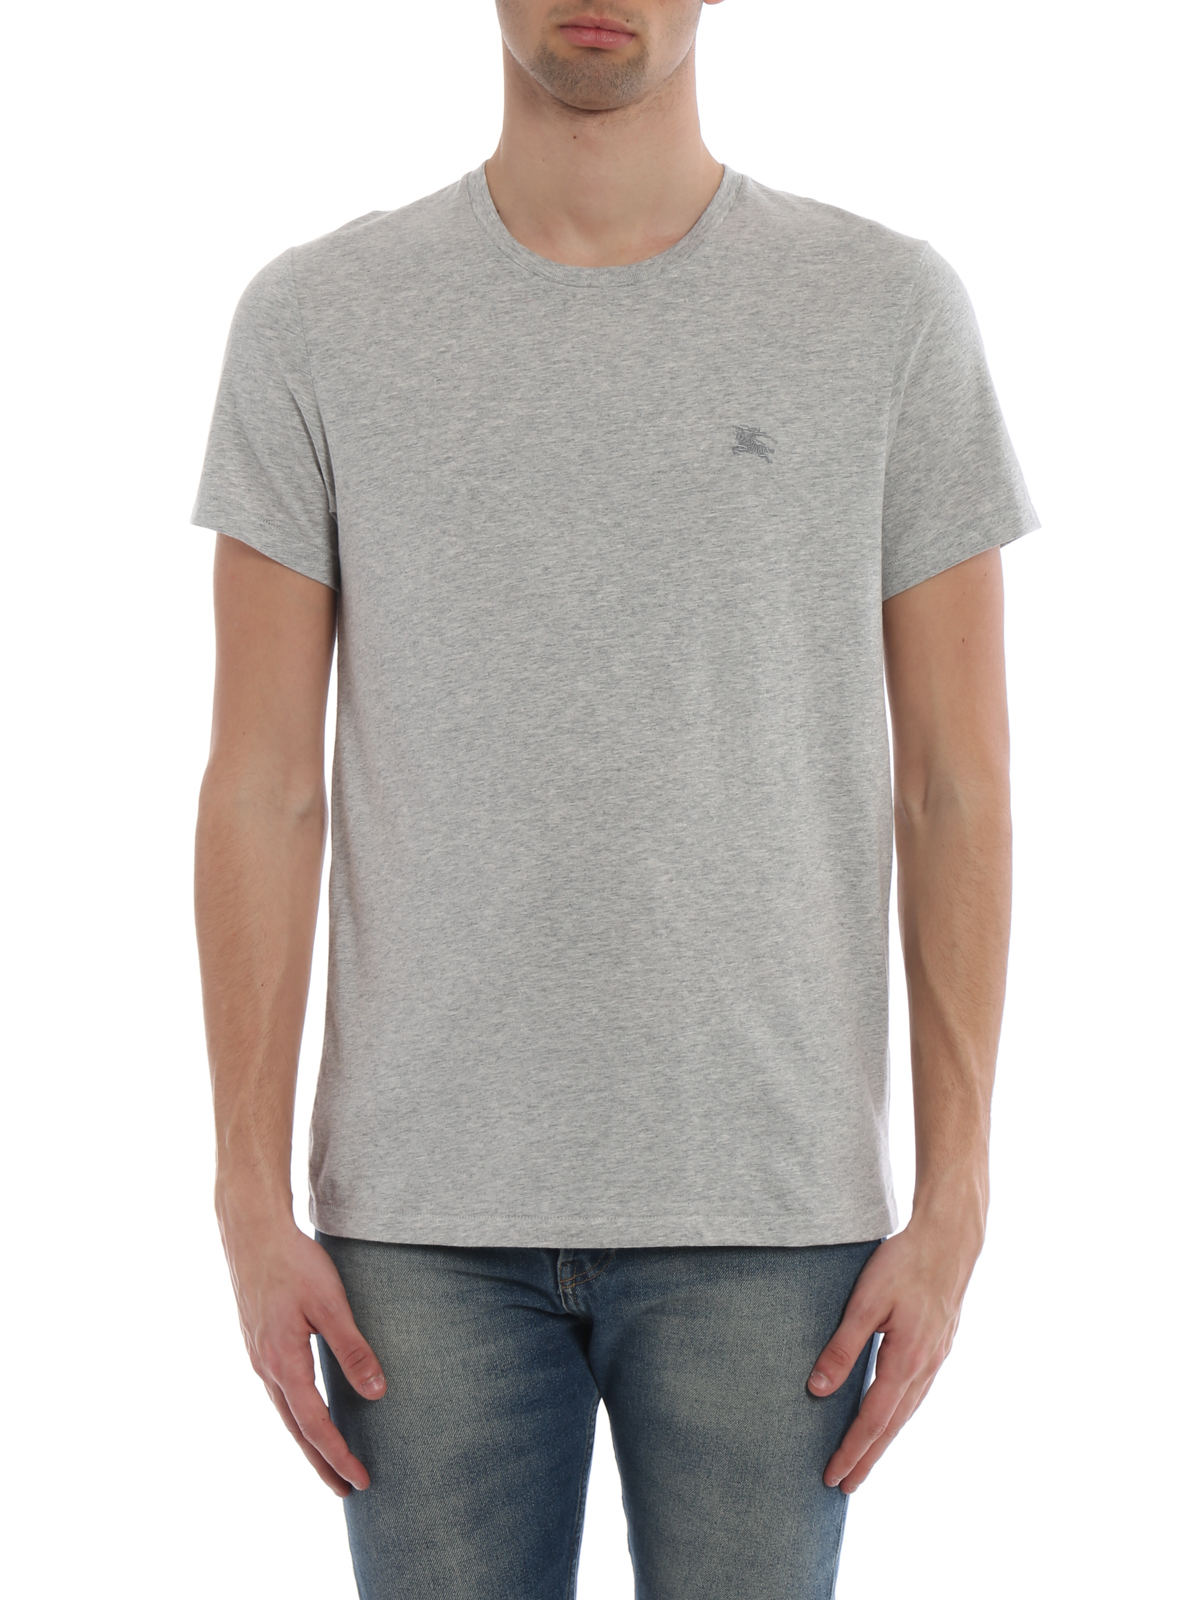 Burberry - Joeforth grey jersey T-shirt 